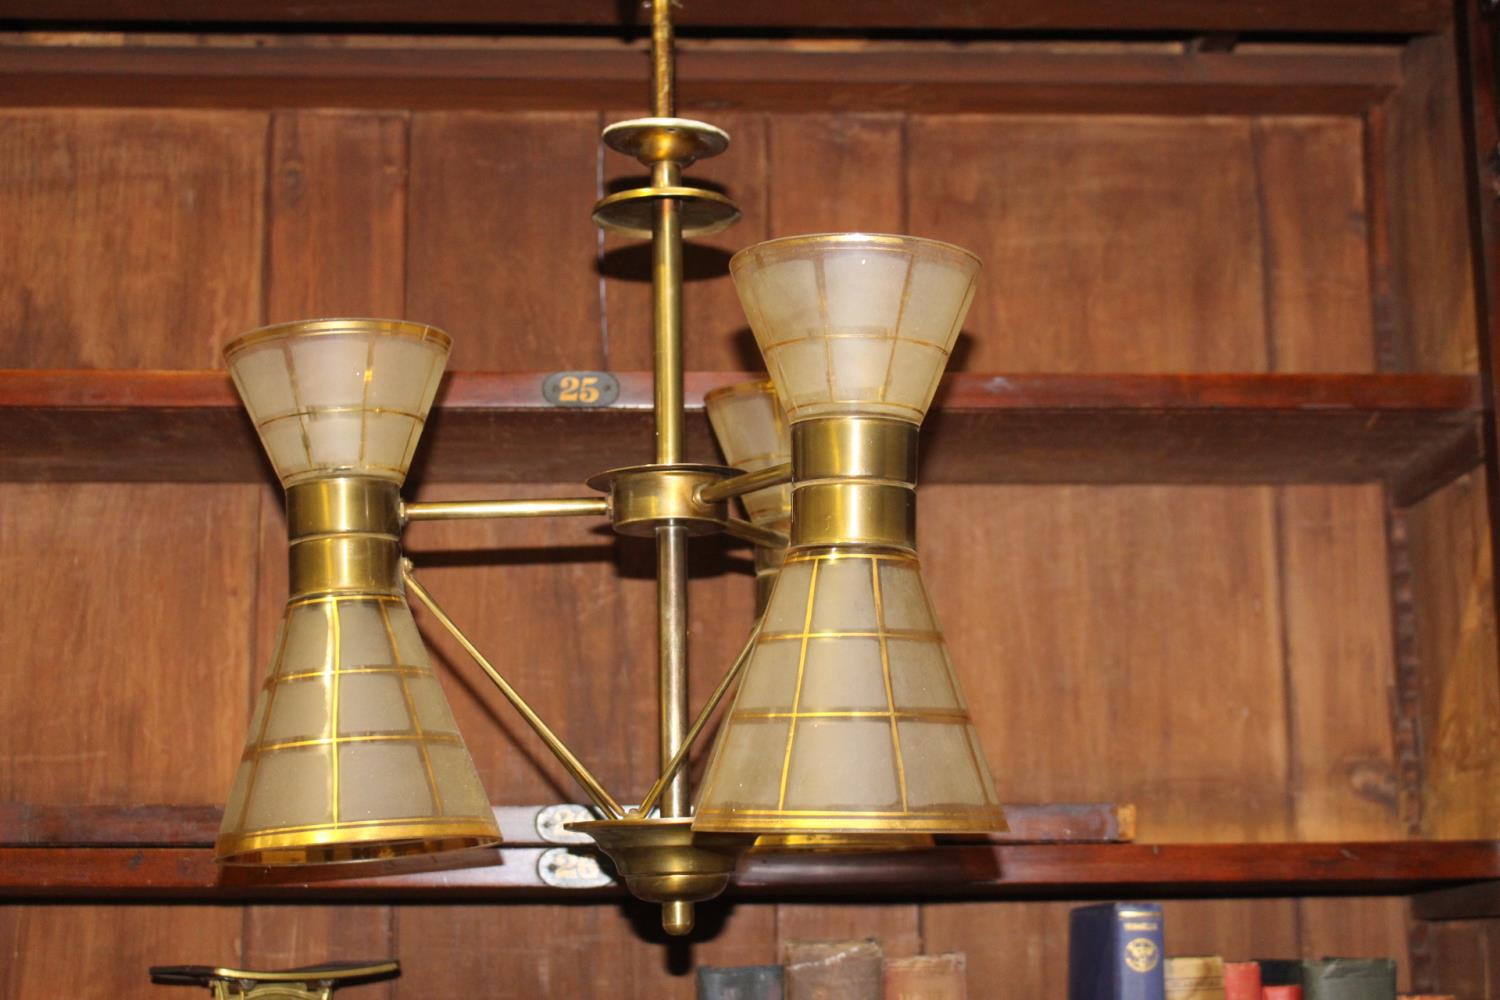 Brass and glass three branch chandelier { 50cm H X 40cm Dia }.